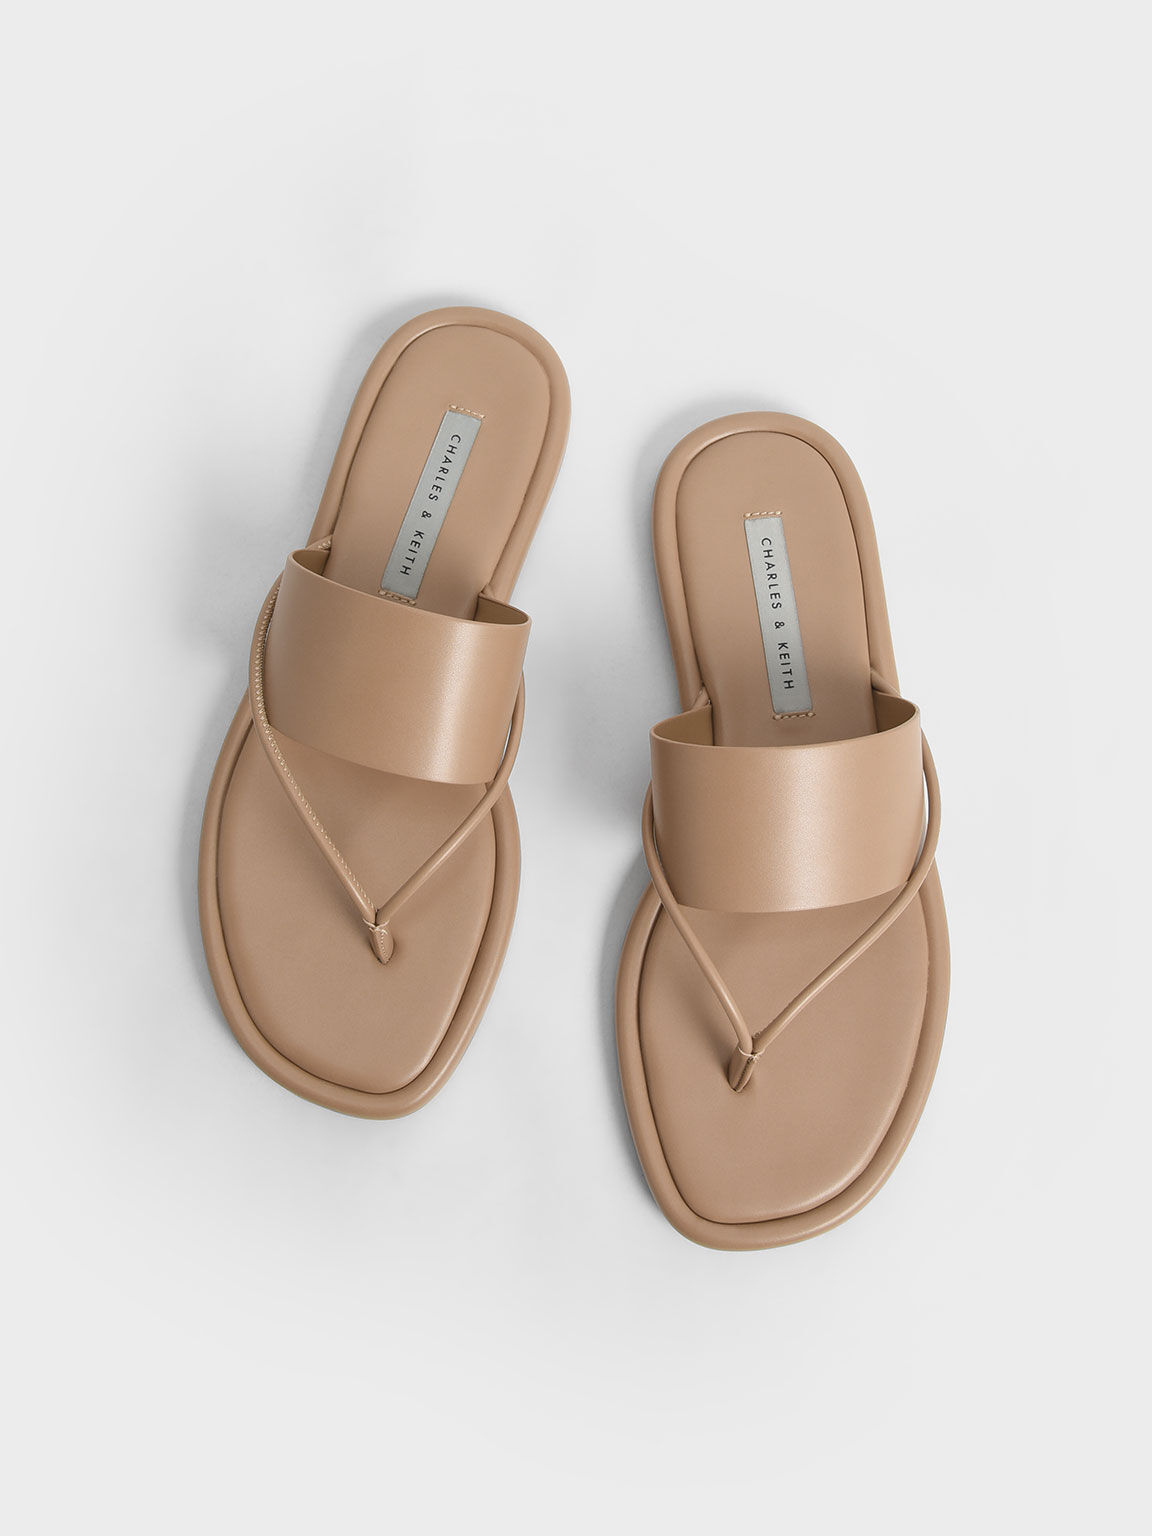 Padded Thong Sandals, Camel, hi-res